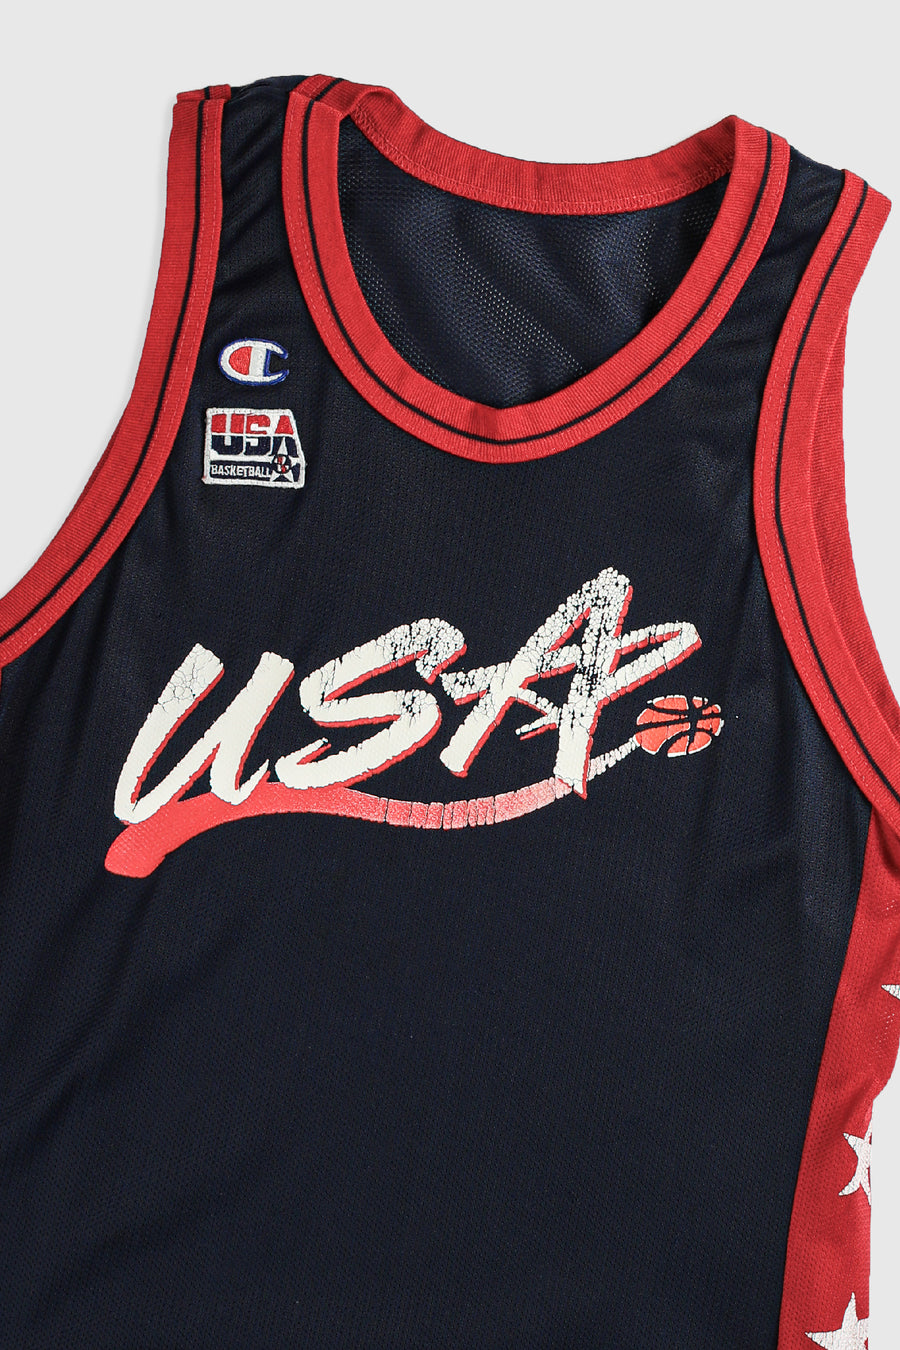 Vintage USA Basketball Jersey - M